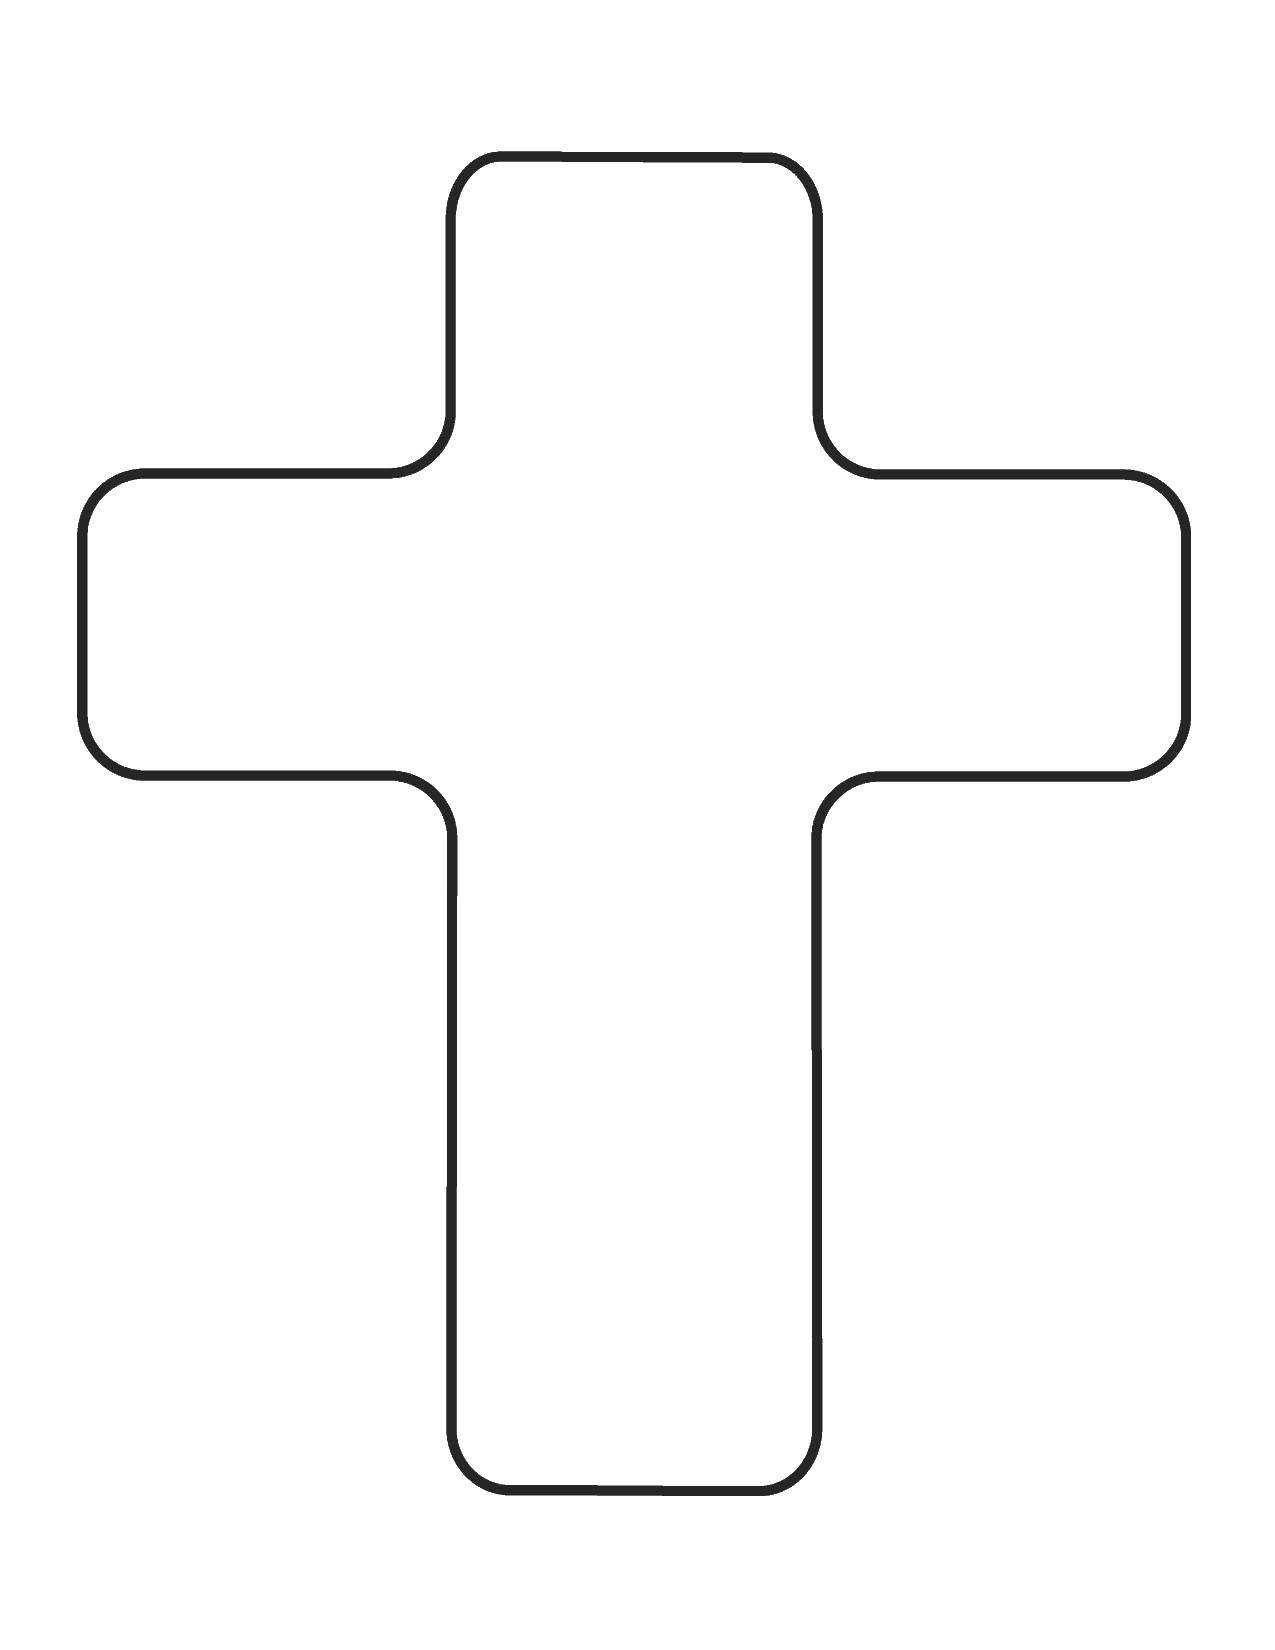 Coloring Cross. Category Cross. Tags:  cross.